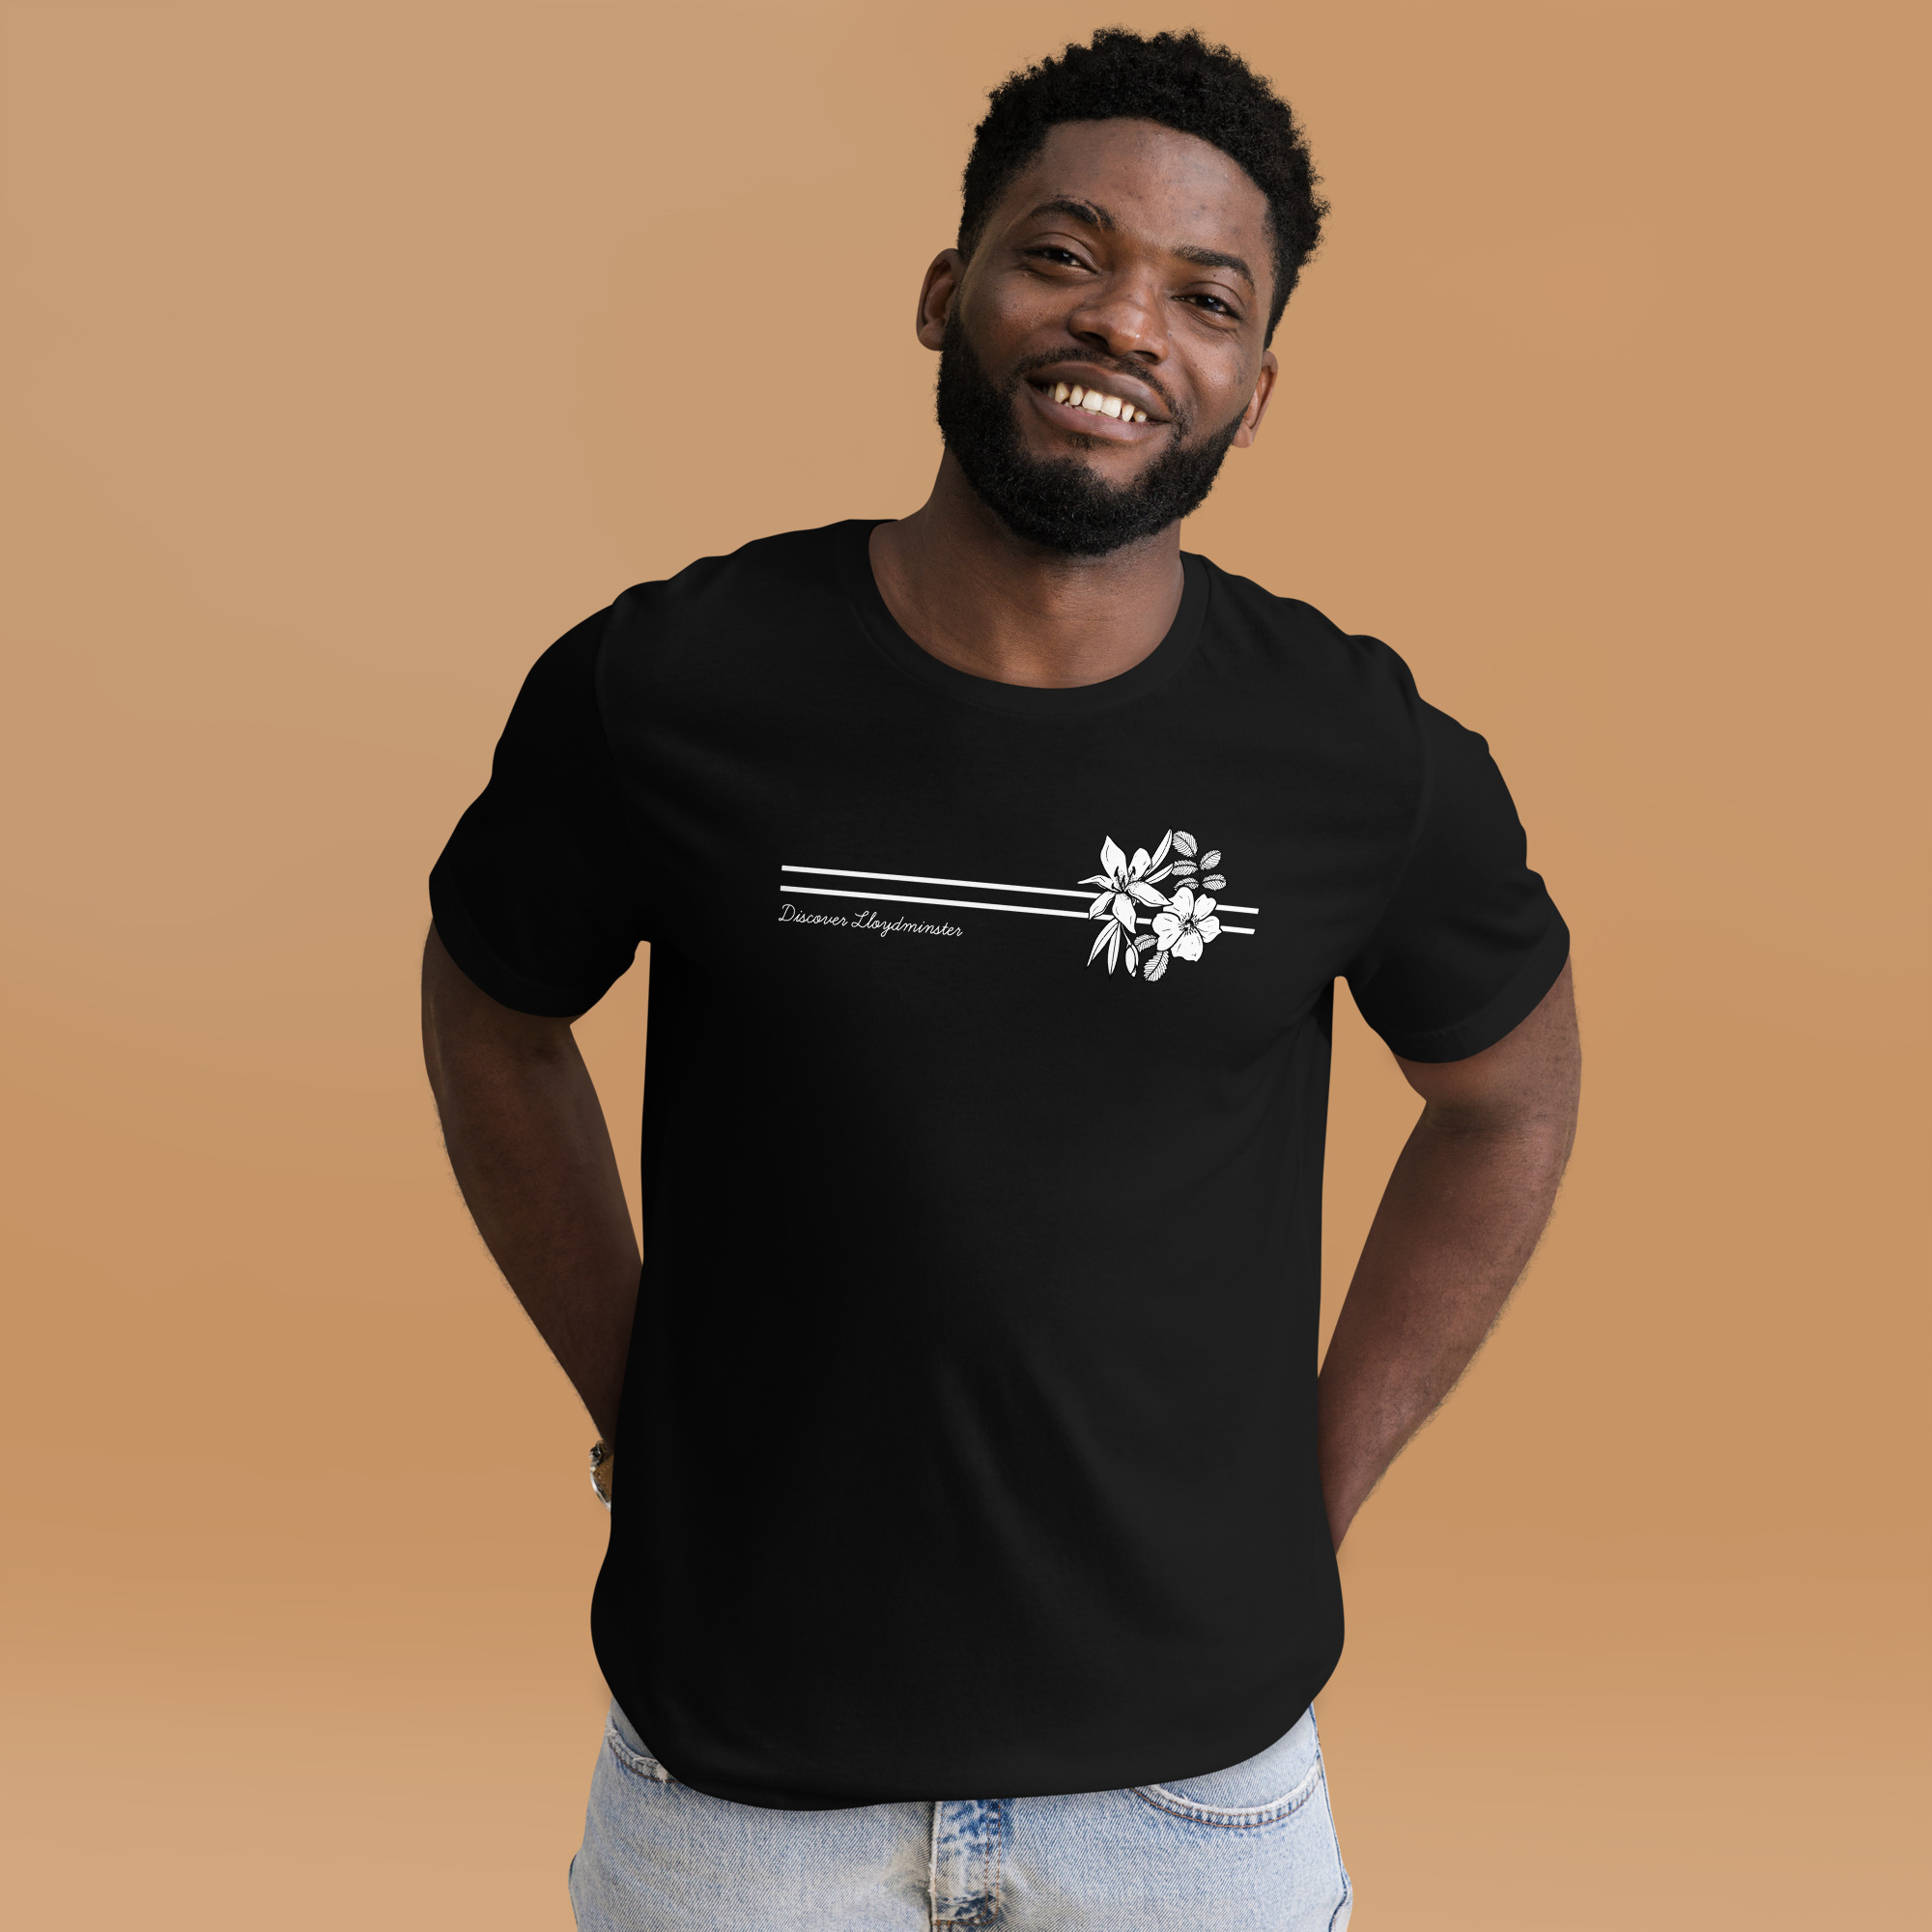 Black unisex t-shirt showed on man